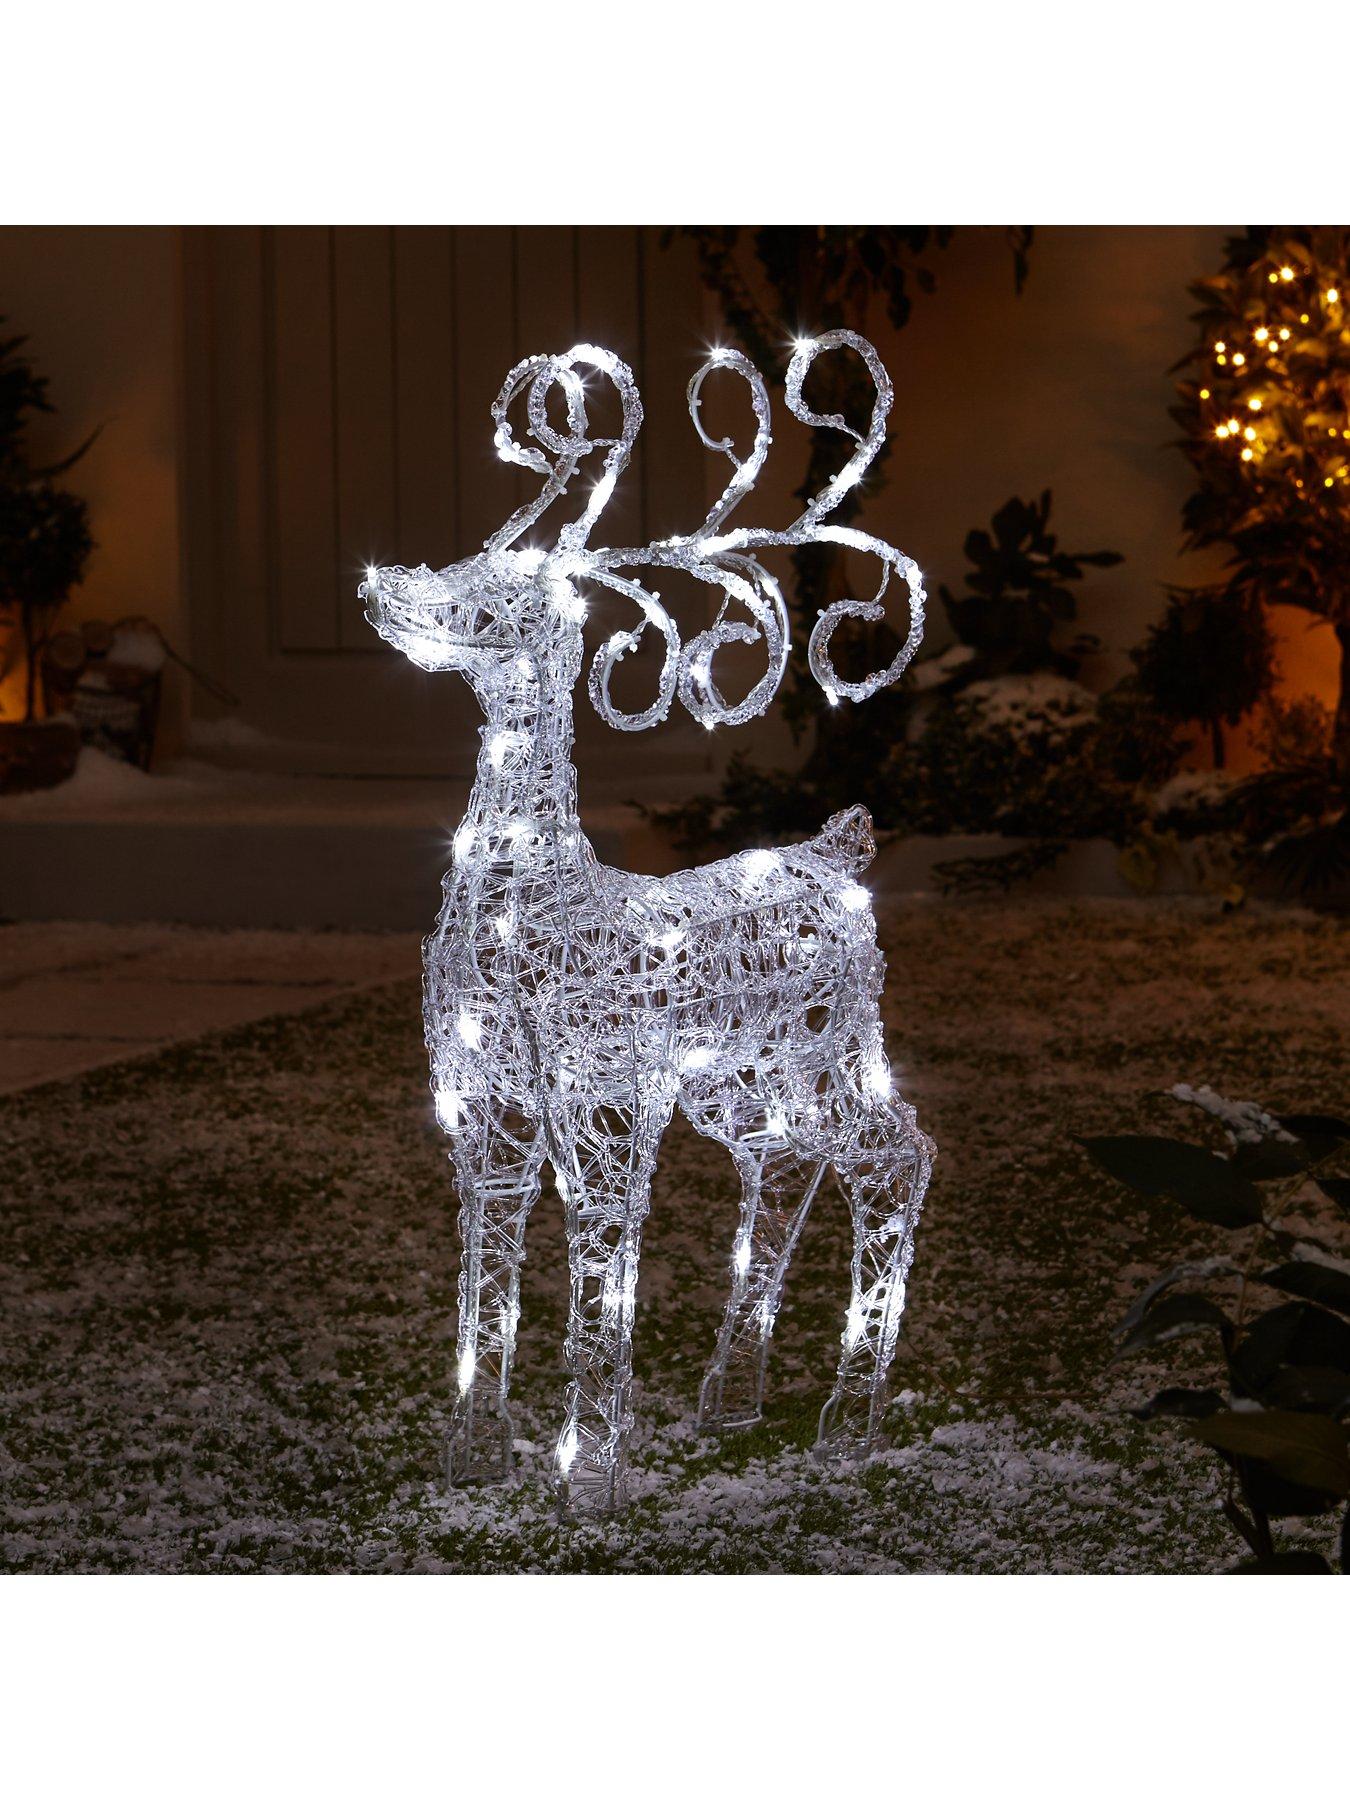 Spun Acrylic Light Up Standing Reindeer Outdoor Christmas